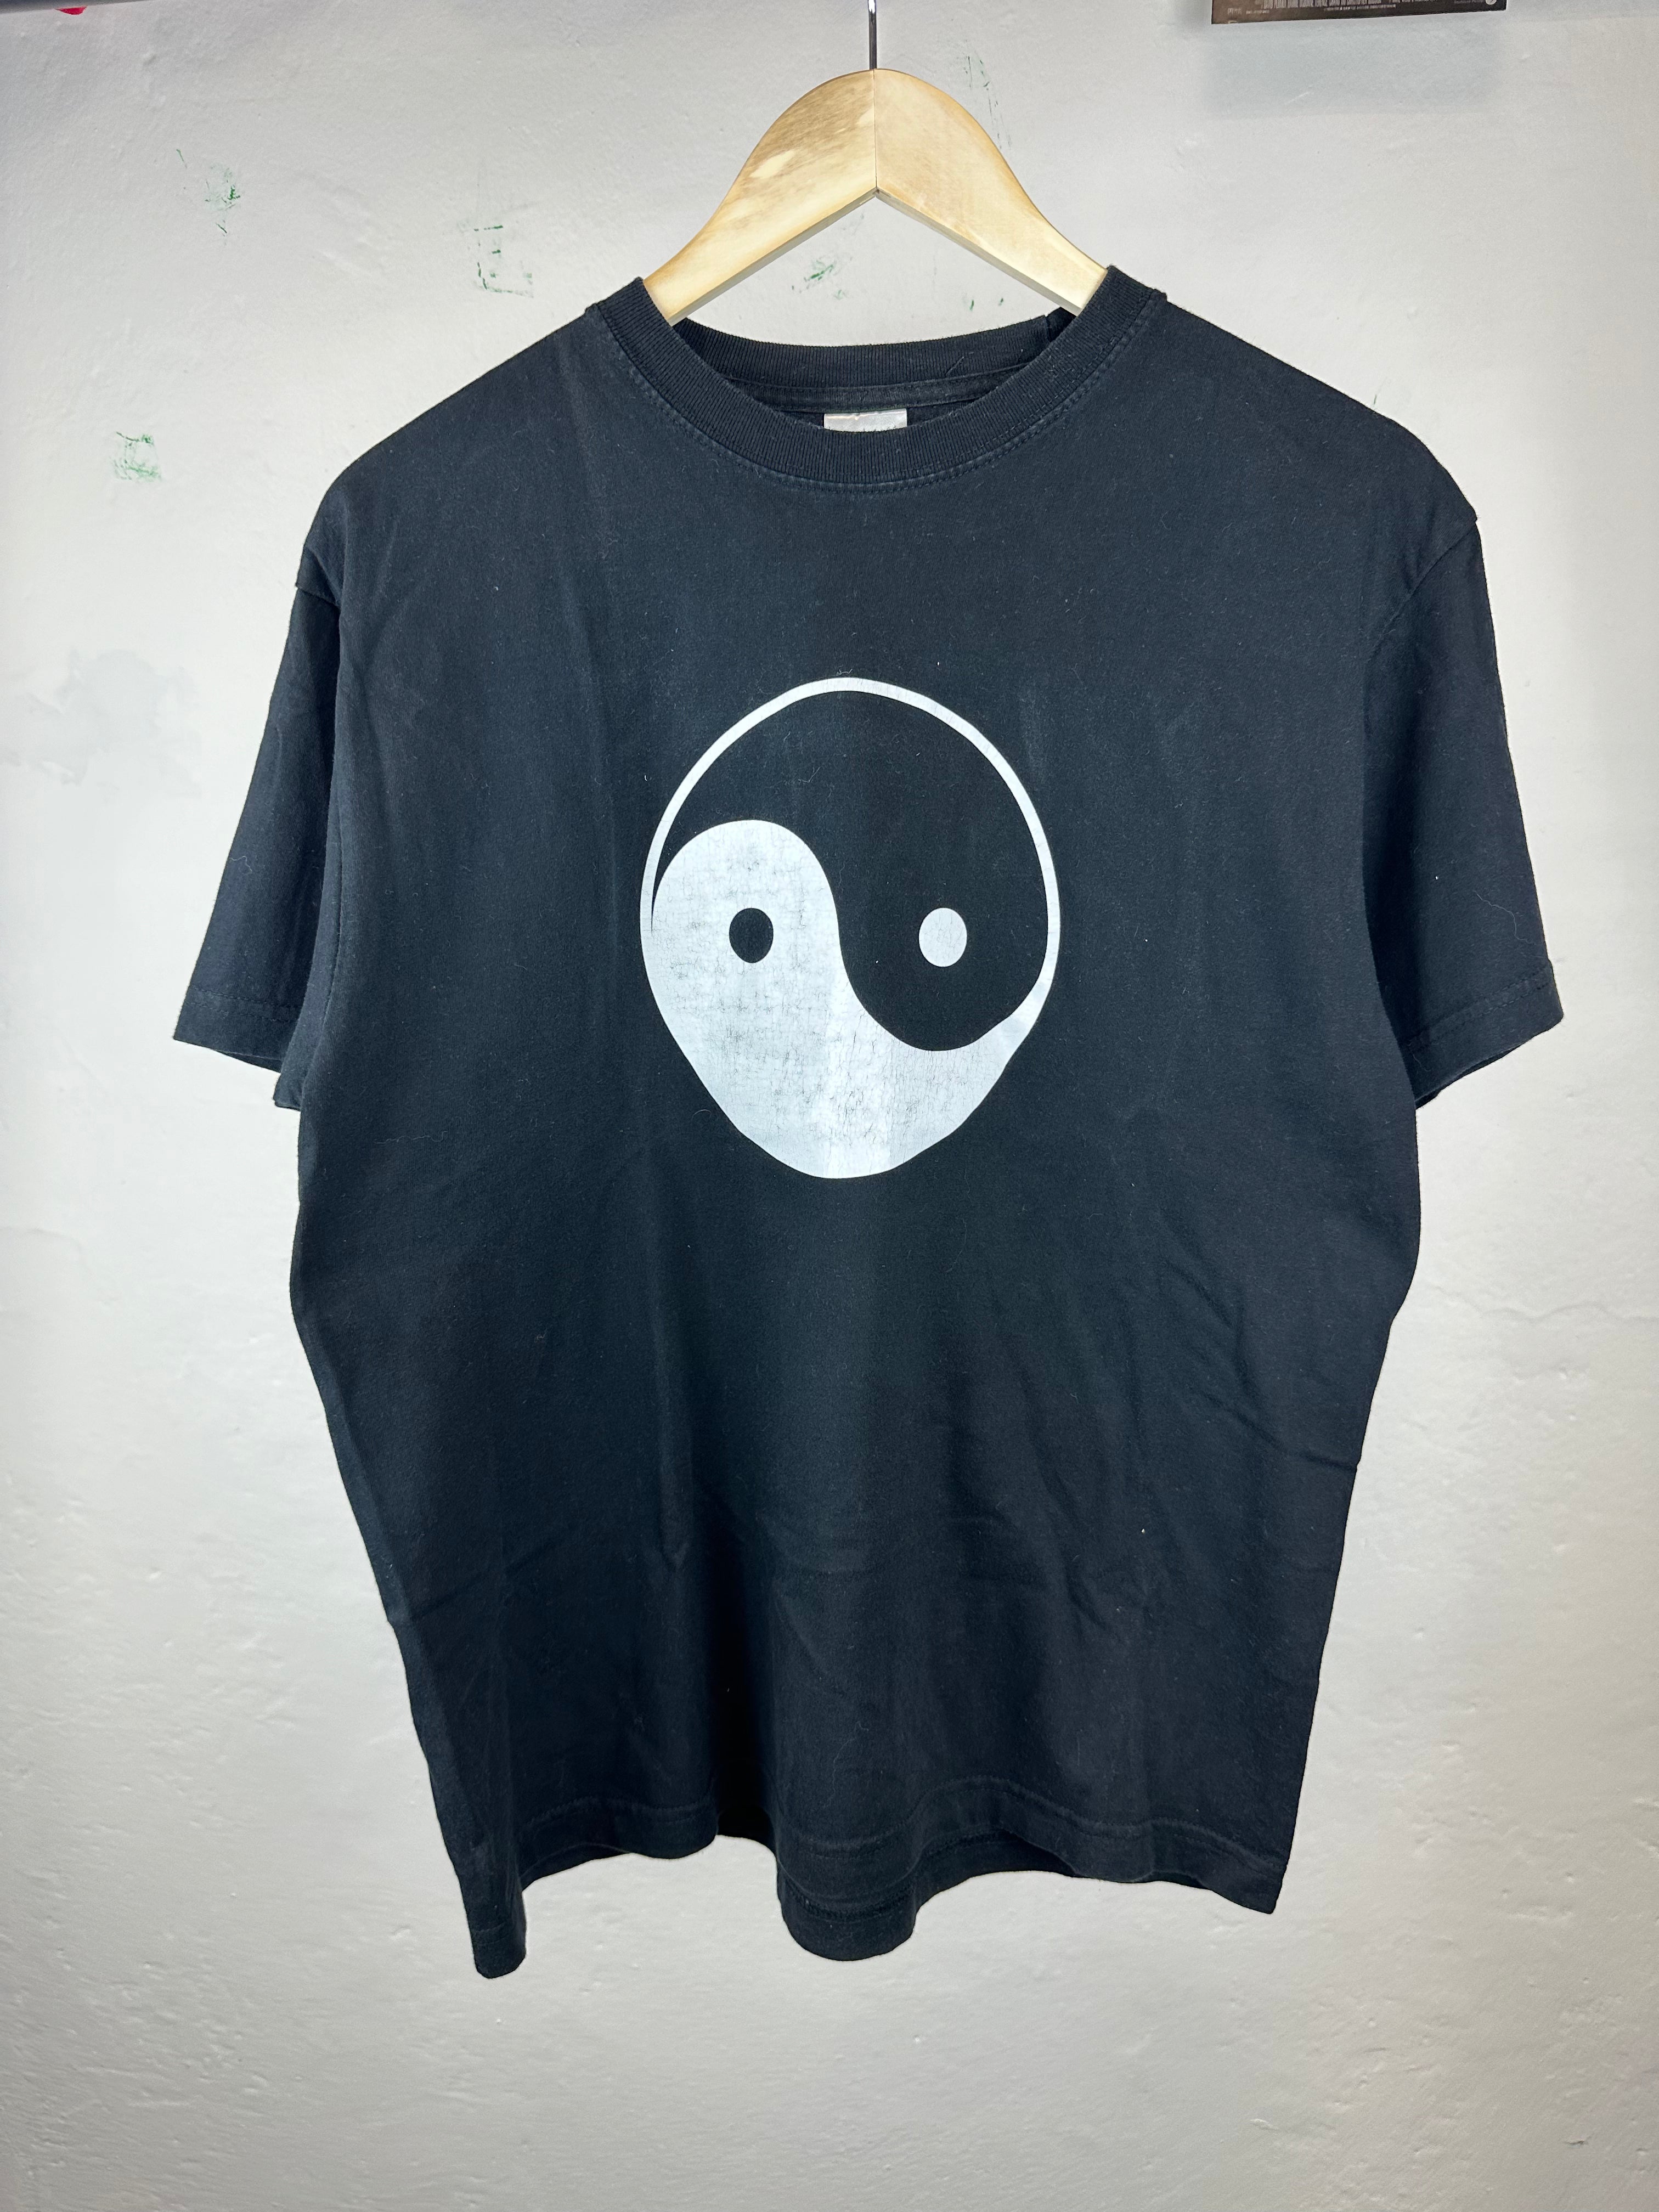 Vintage Yin Yang T-shirt - size S/M